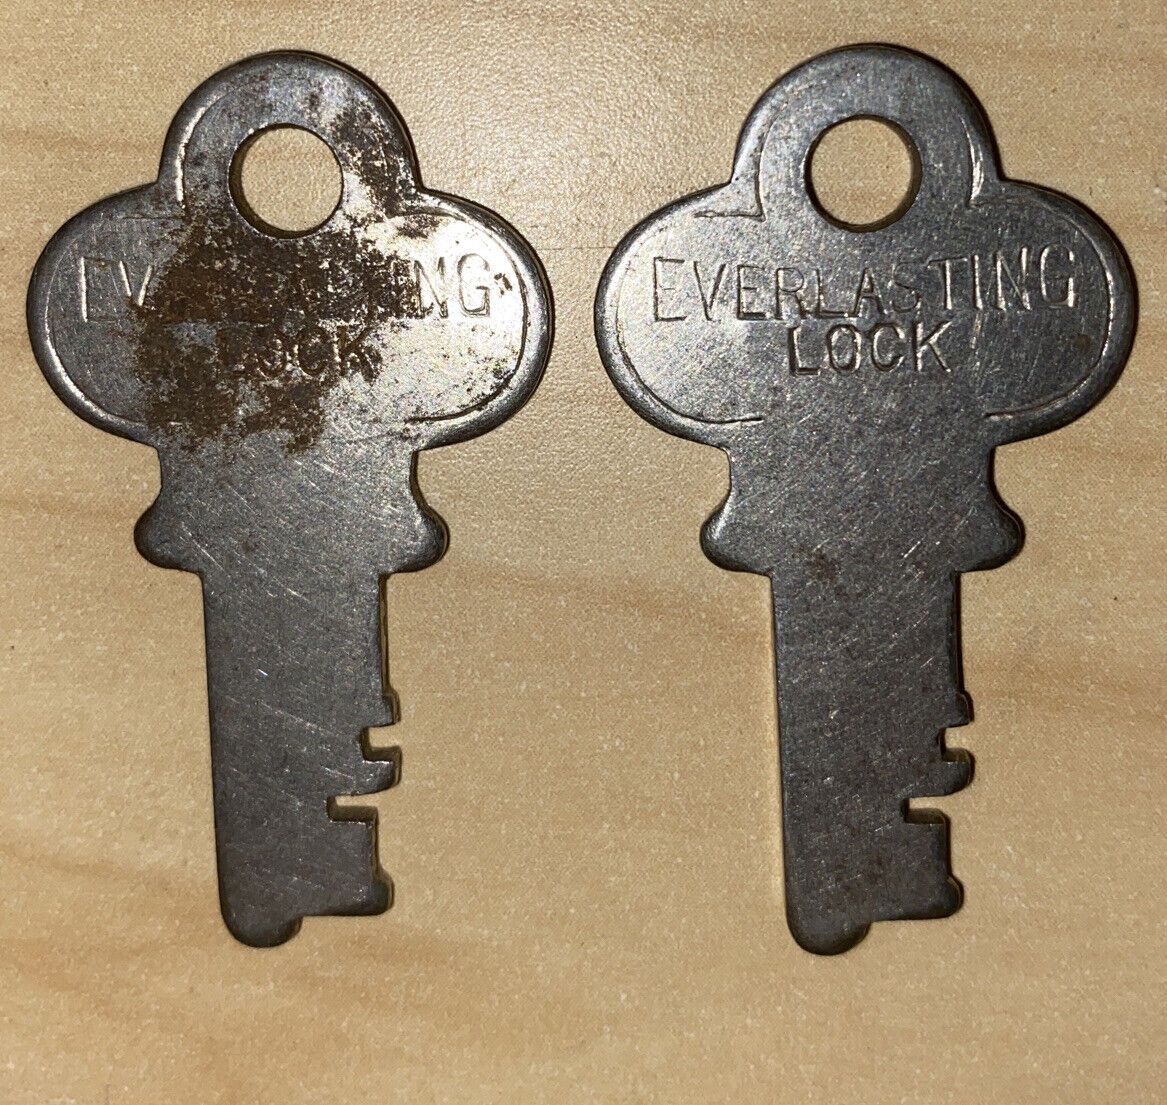 Vintage Pair Of Everlasting Lock Co. T4552 Trunk Keys  T4552 Similar To Long Co